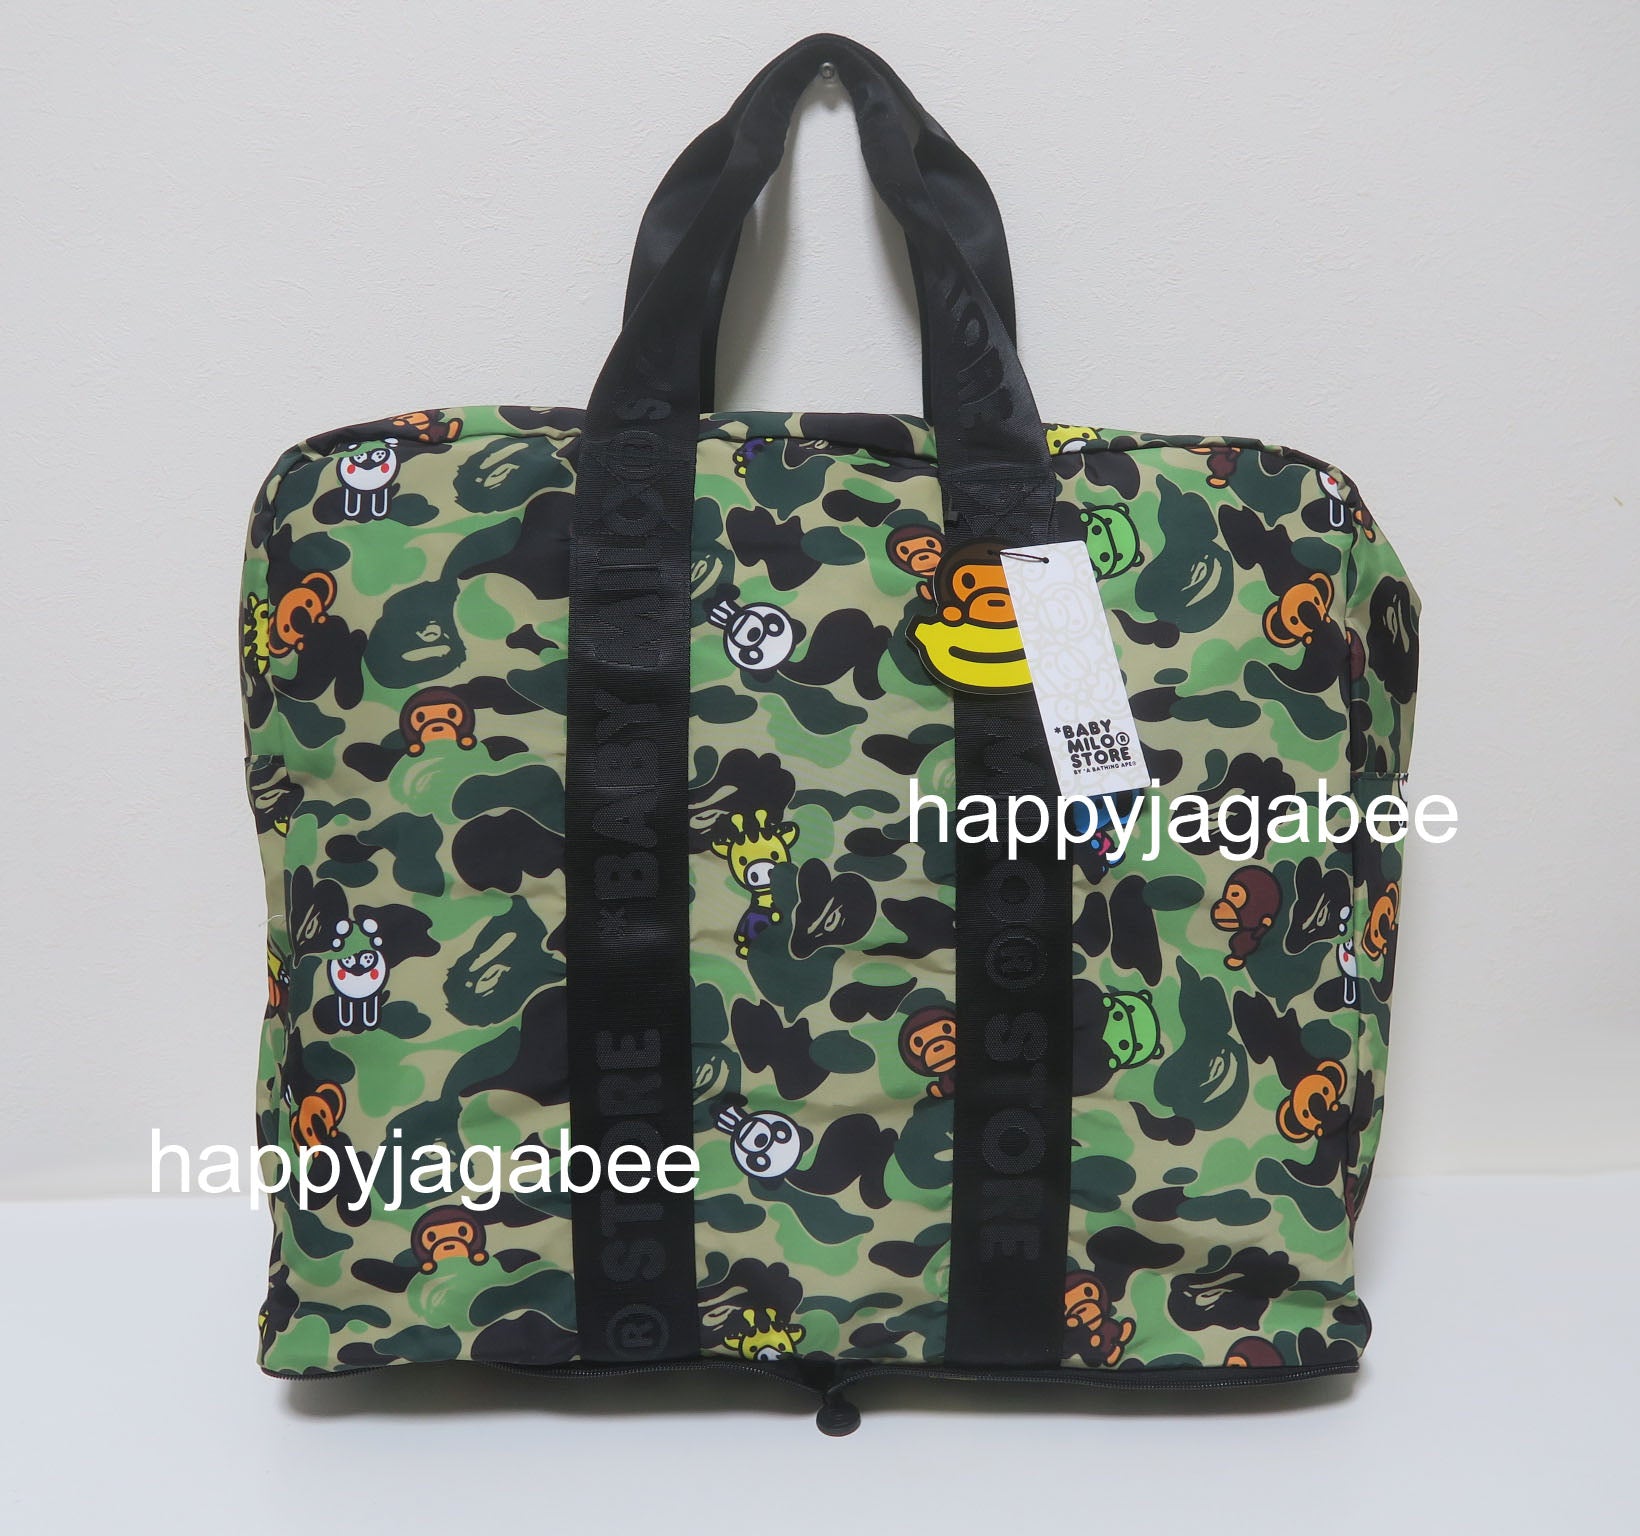 BAPE Duffle Bag Green Camo 2020